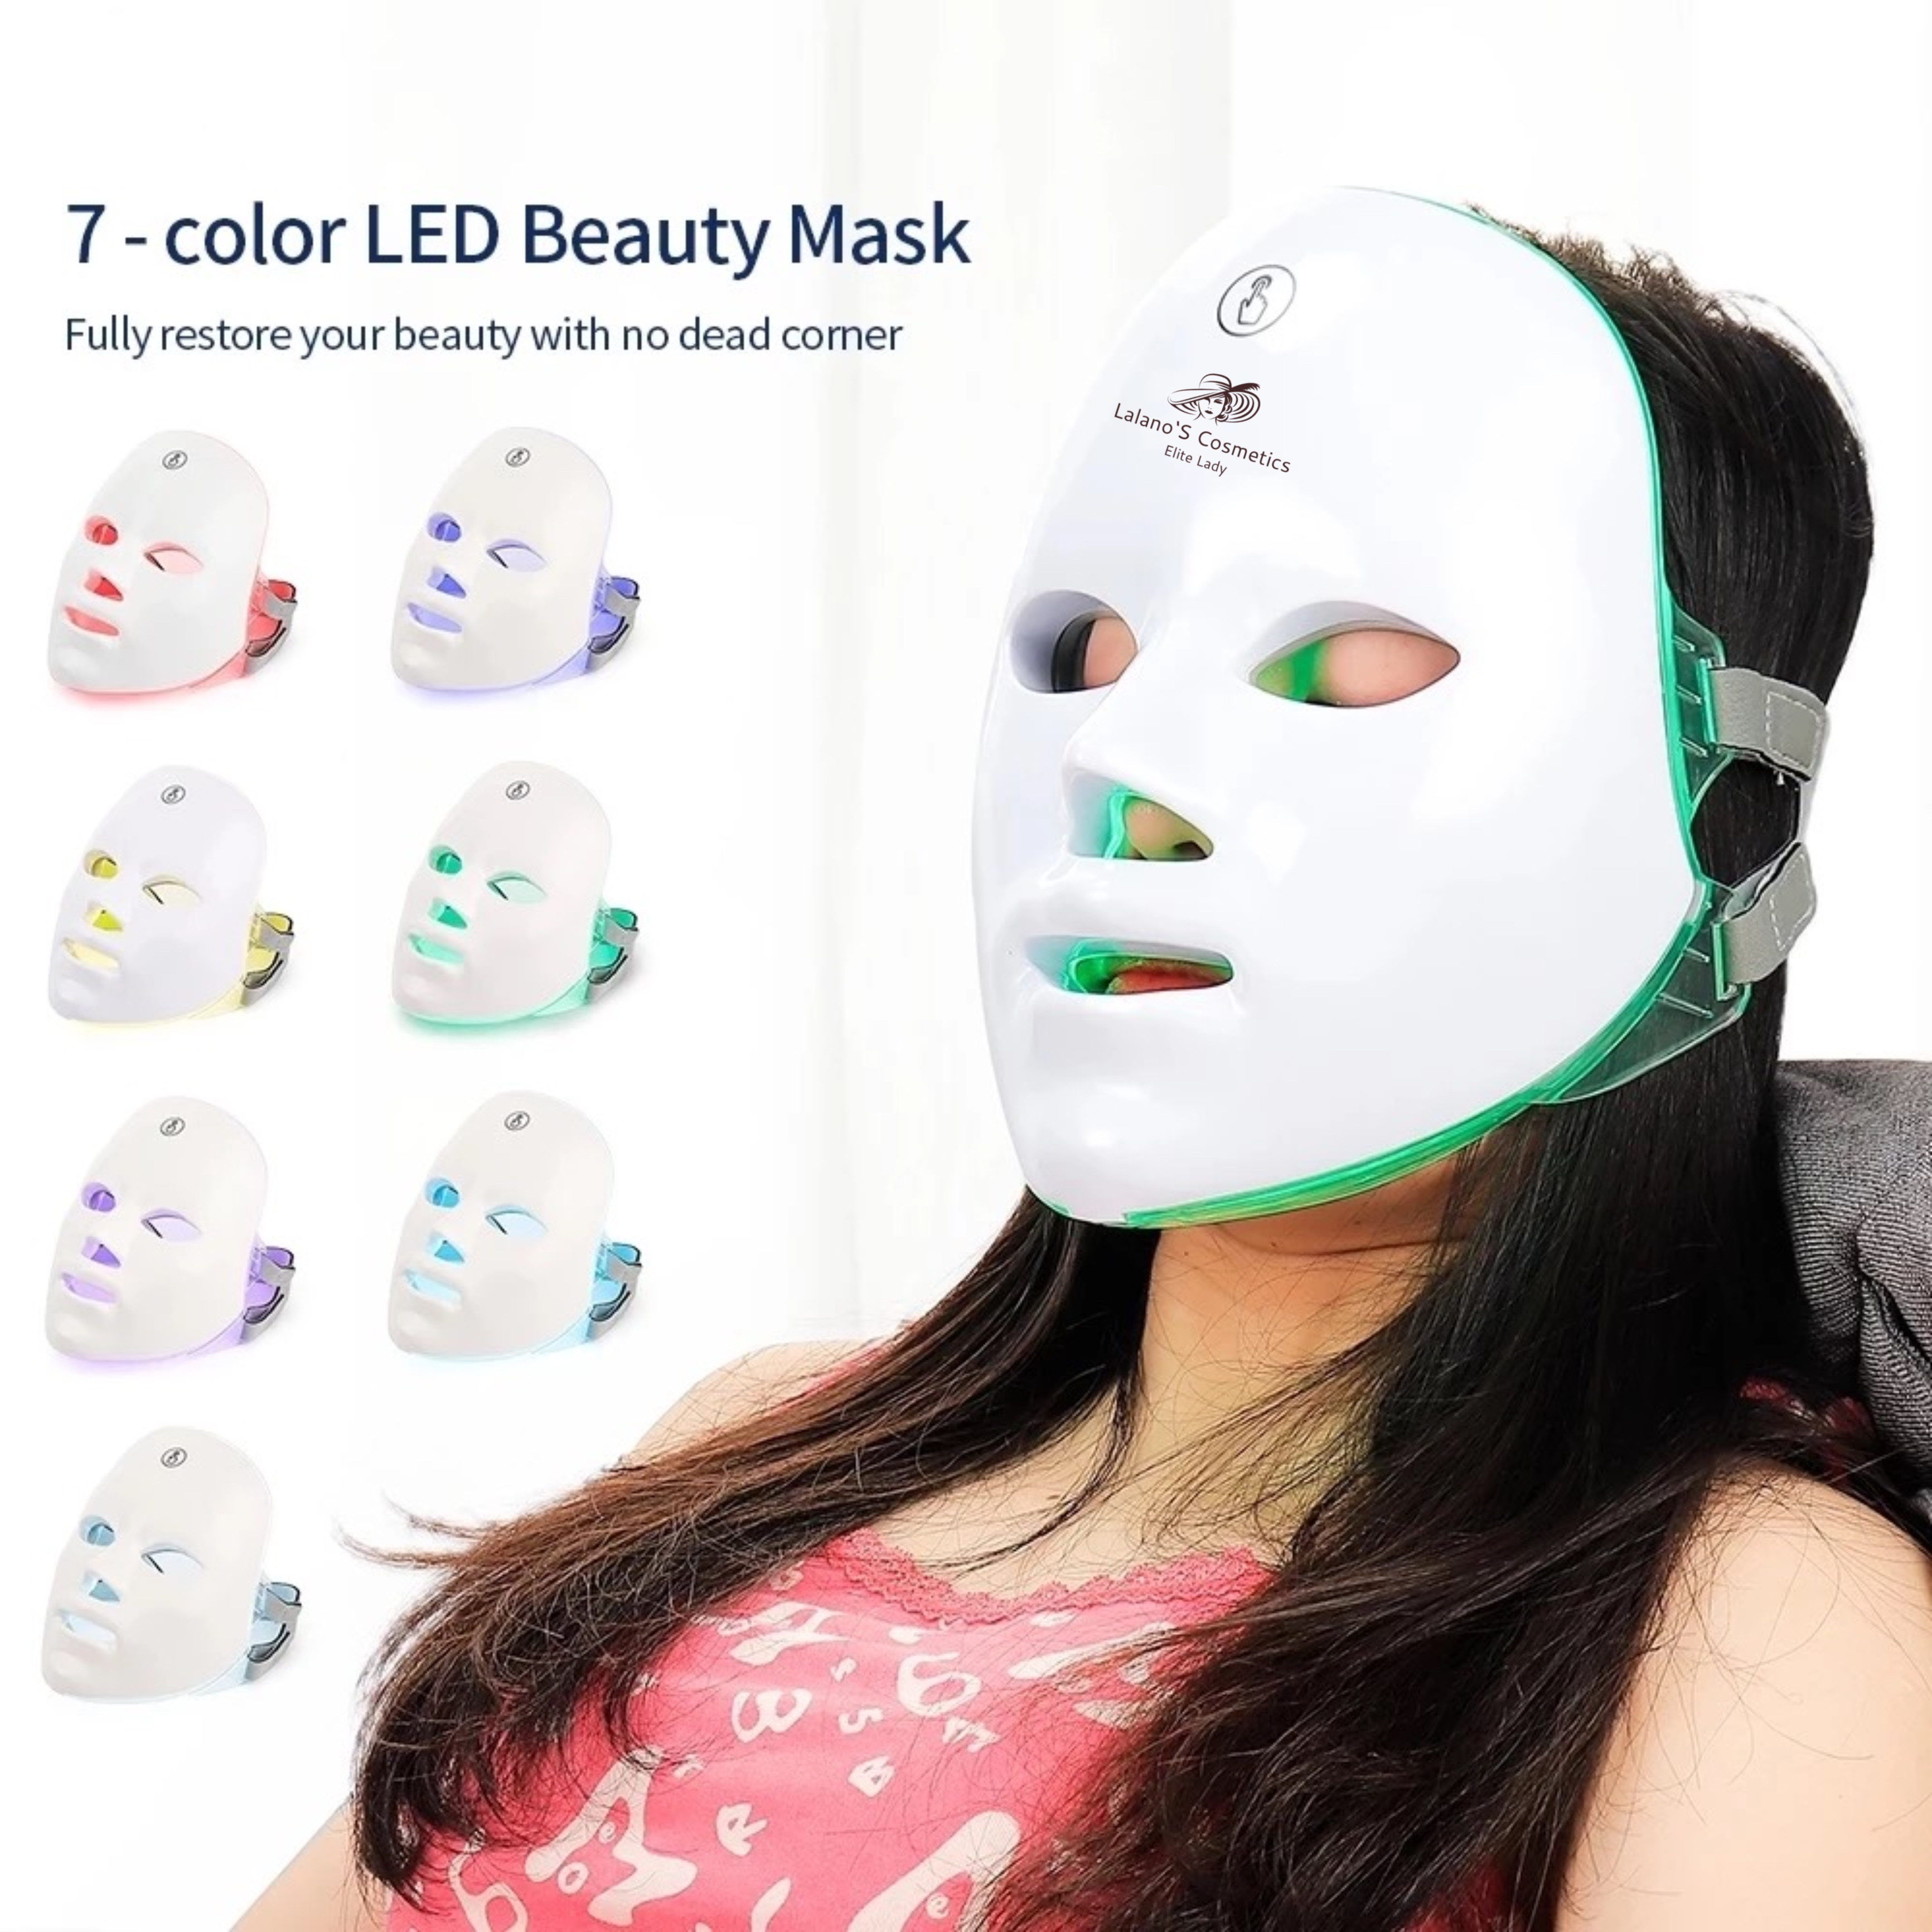 Anti-Aging Light Gesichtspflege COSMETICS Gesichtsmaske facial LALANOS LED